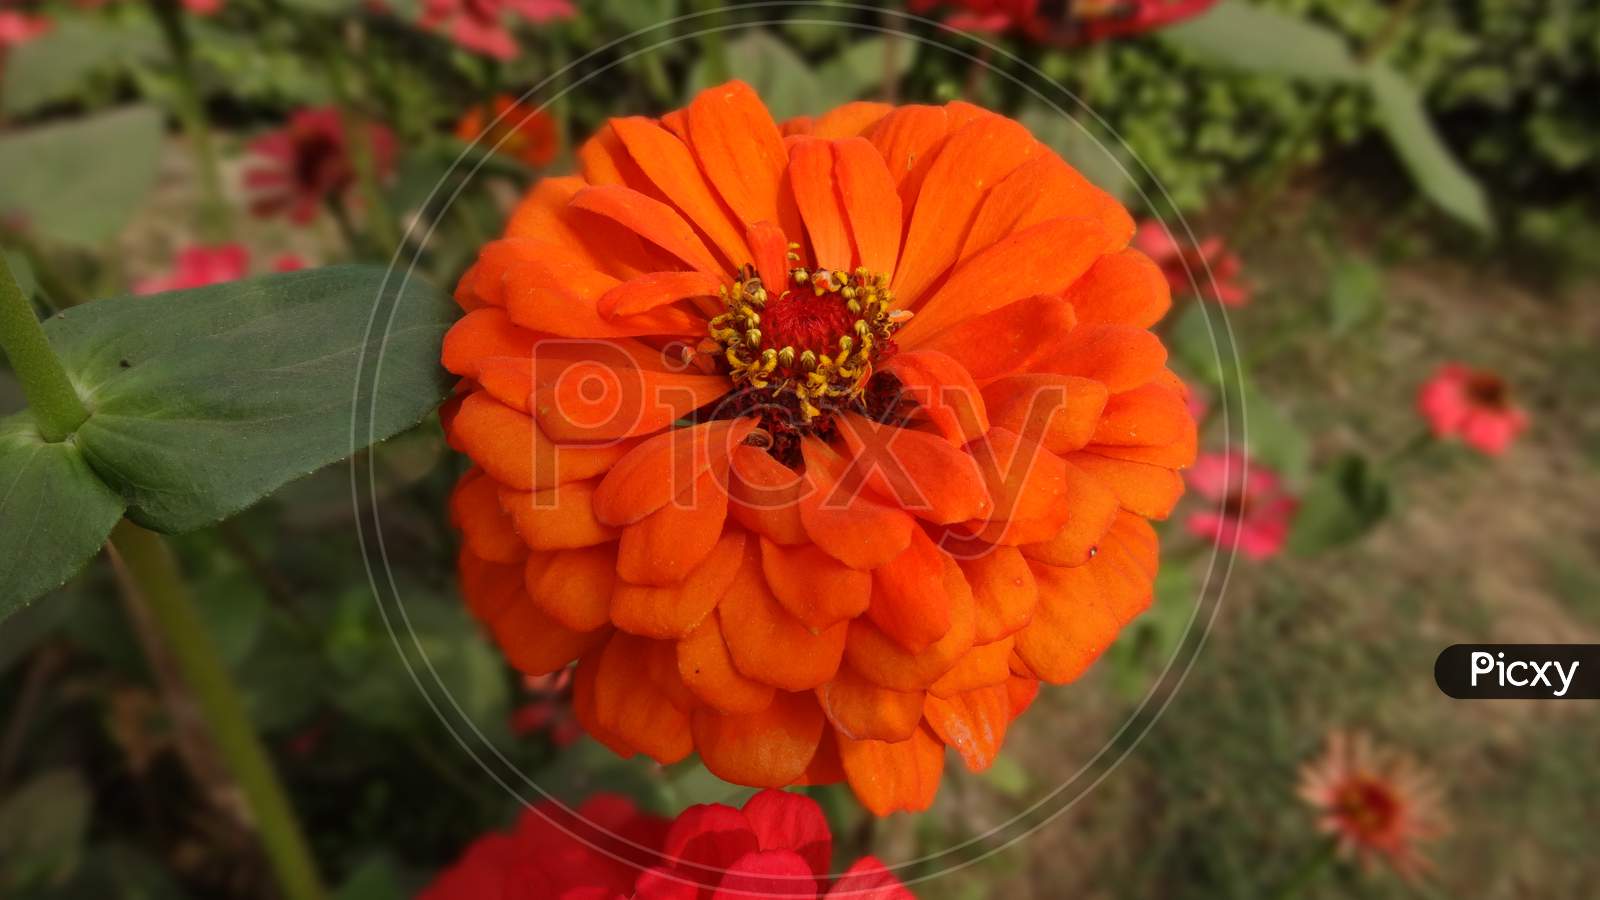 Garden cosmos zinnia orange flowering plant. selective focus and blur background